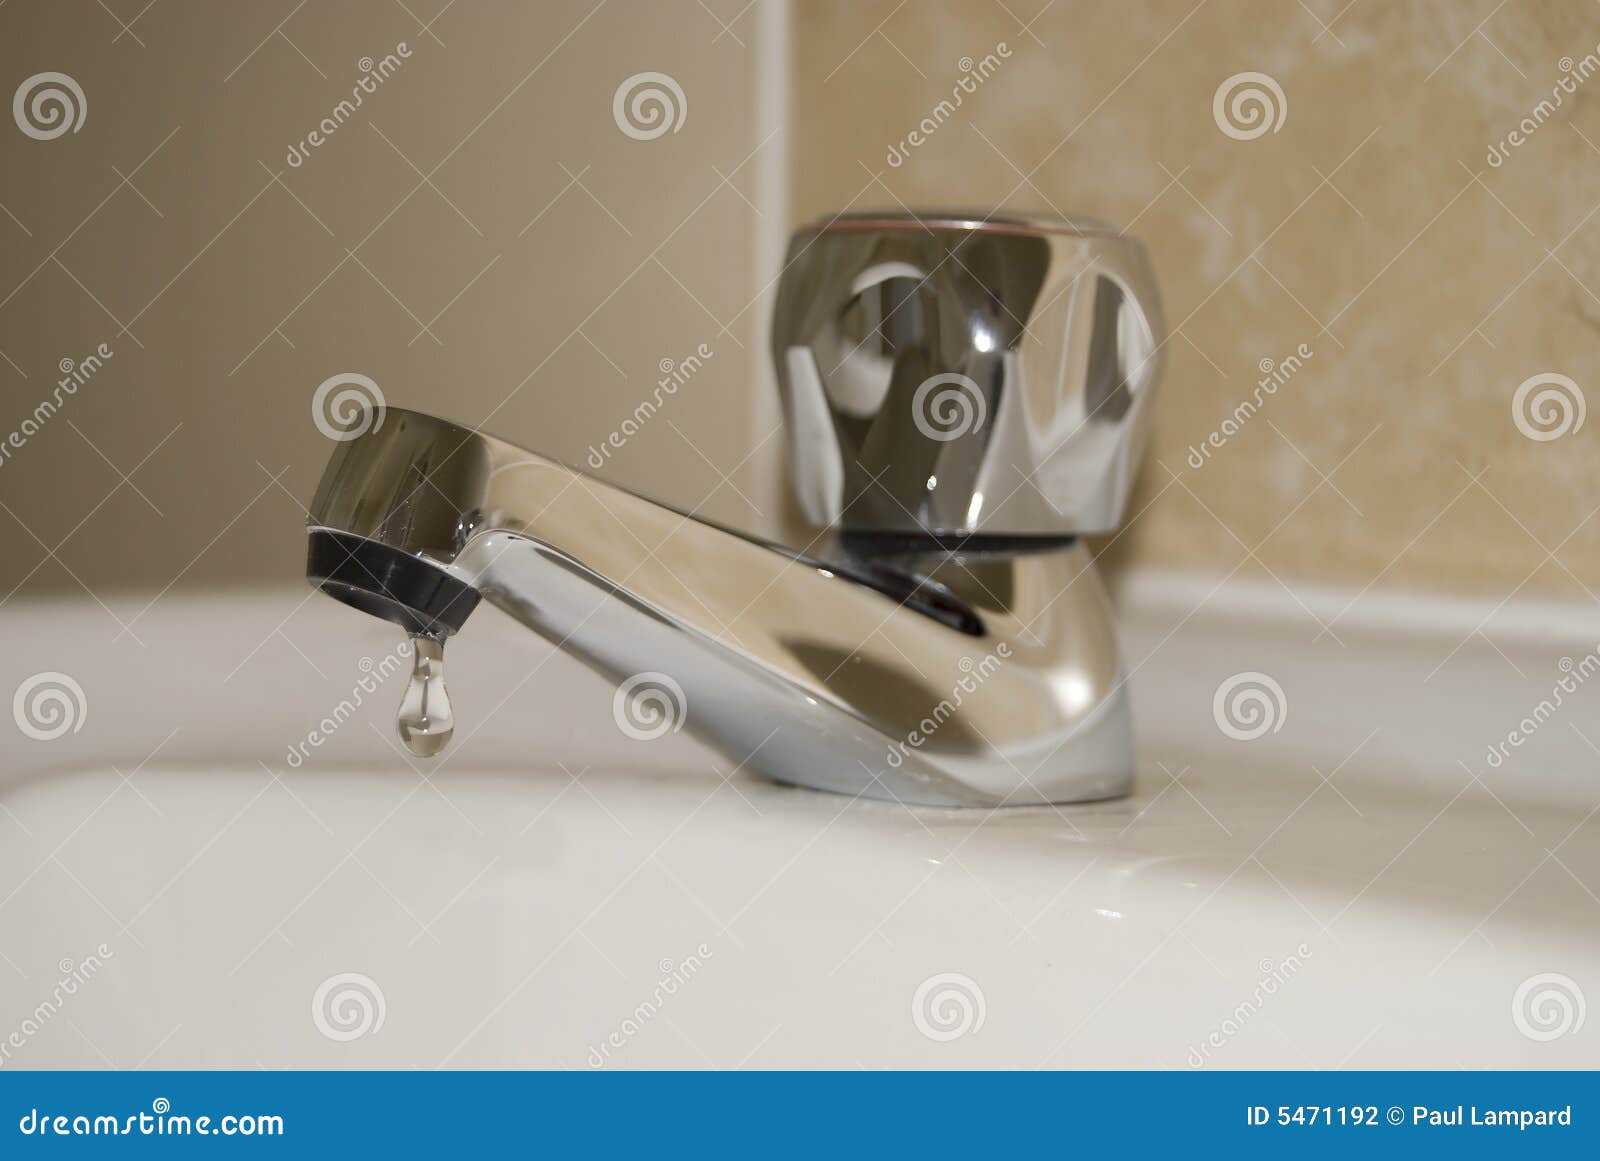 leaking tap